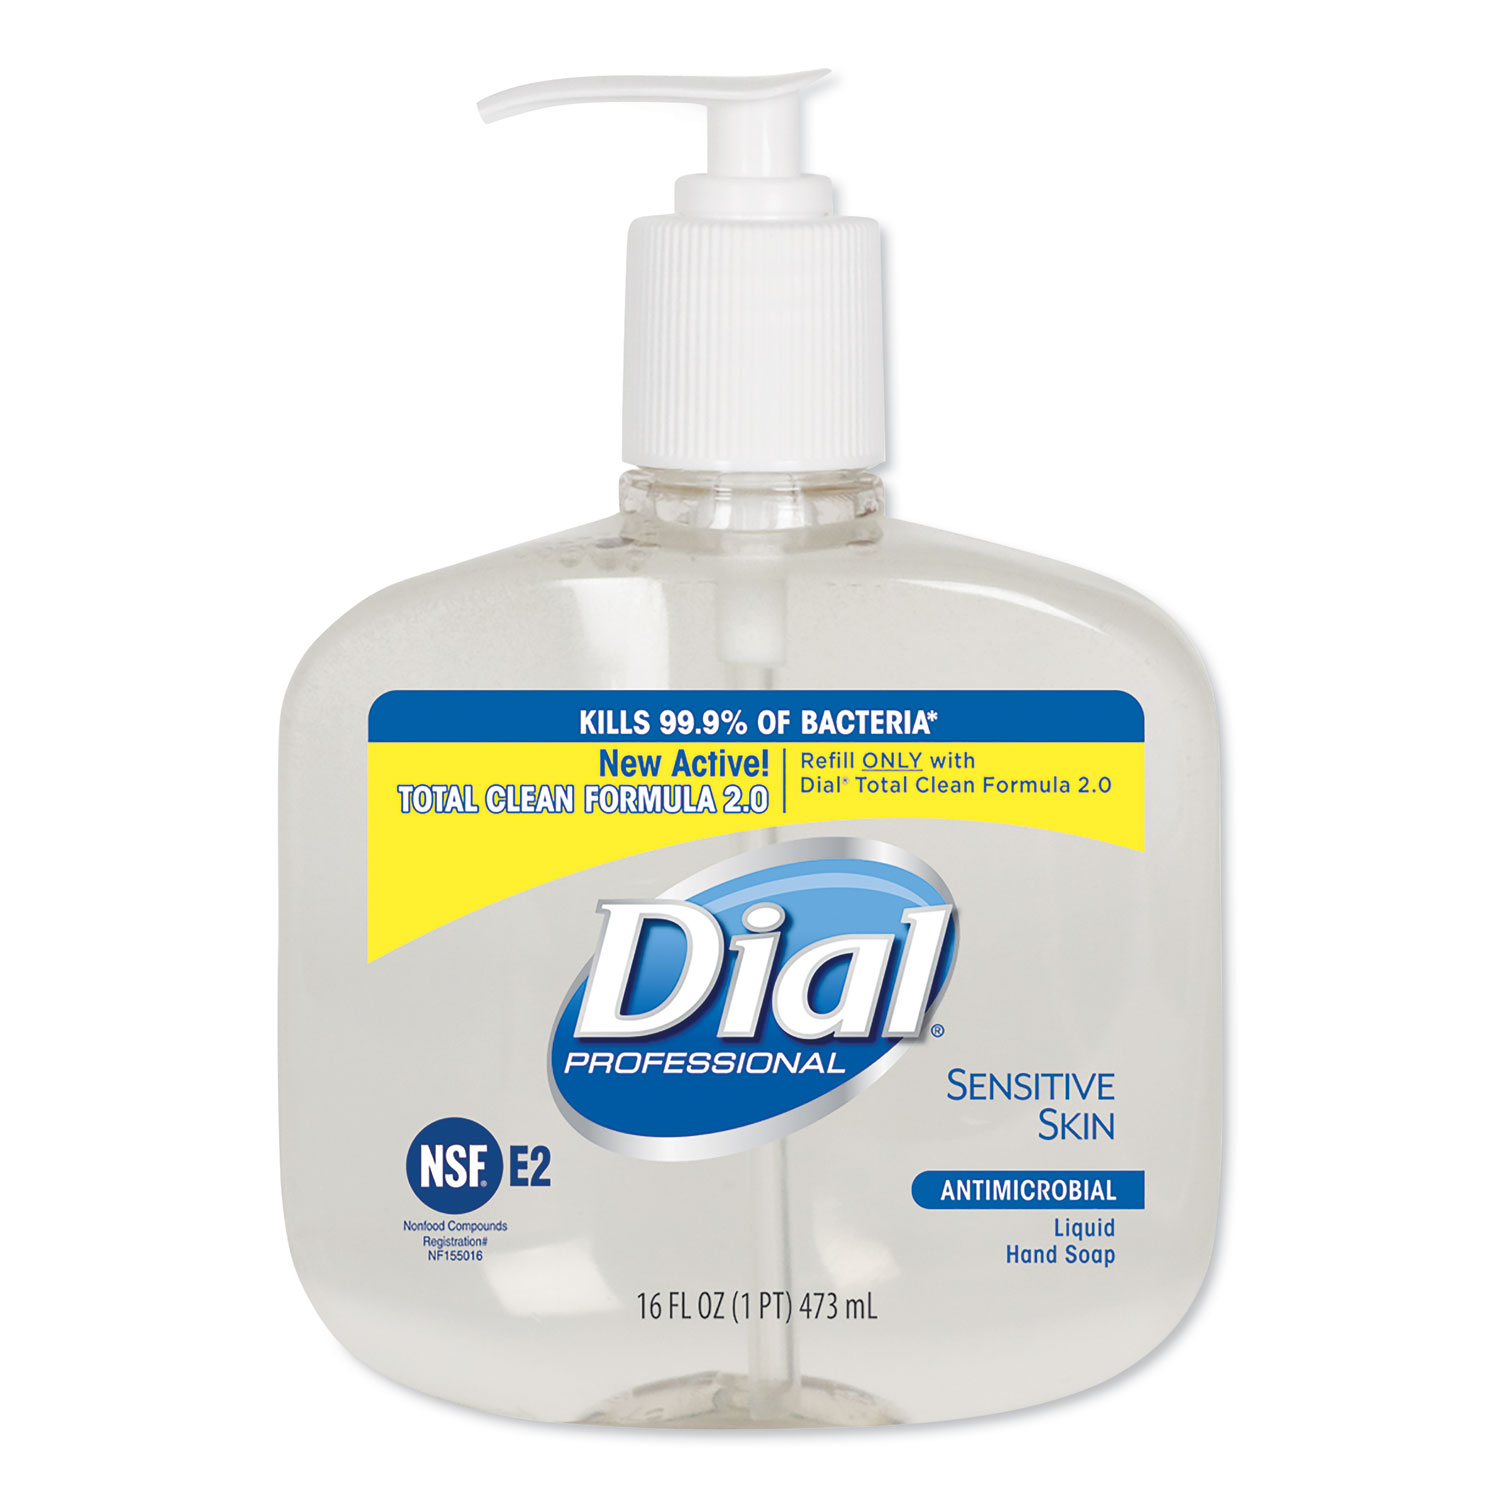  Dial Professional DIA 80784 Antimicrobial Soap for Sensitive Skin, 16 oz Pump Bottle, 12/Carton (DIA80784) 